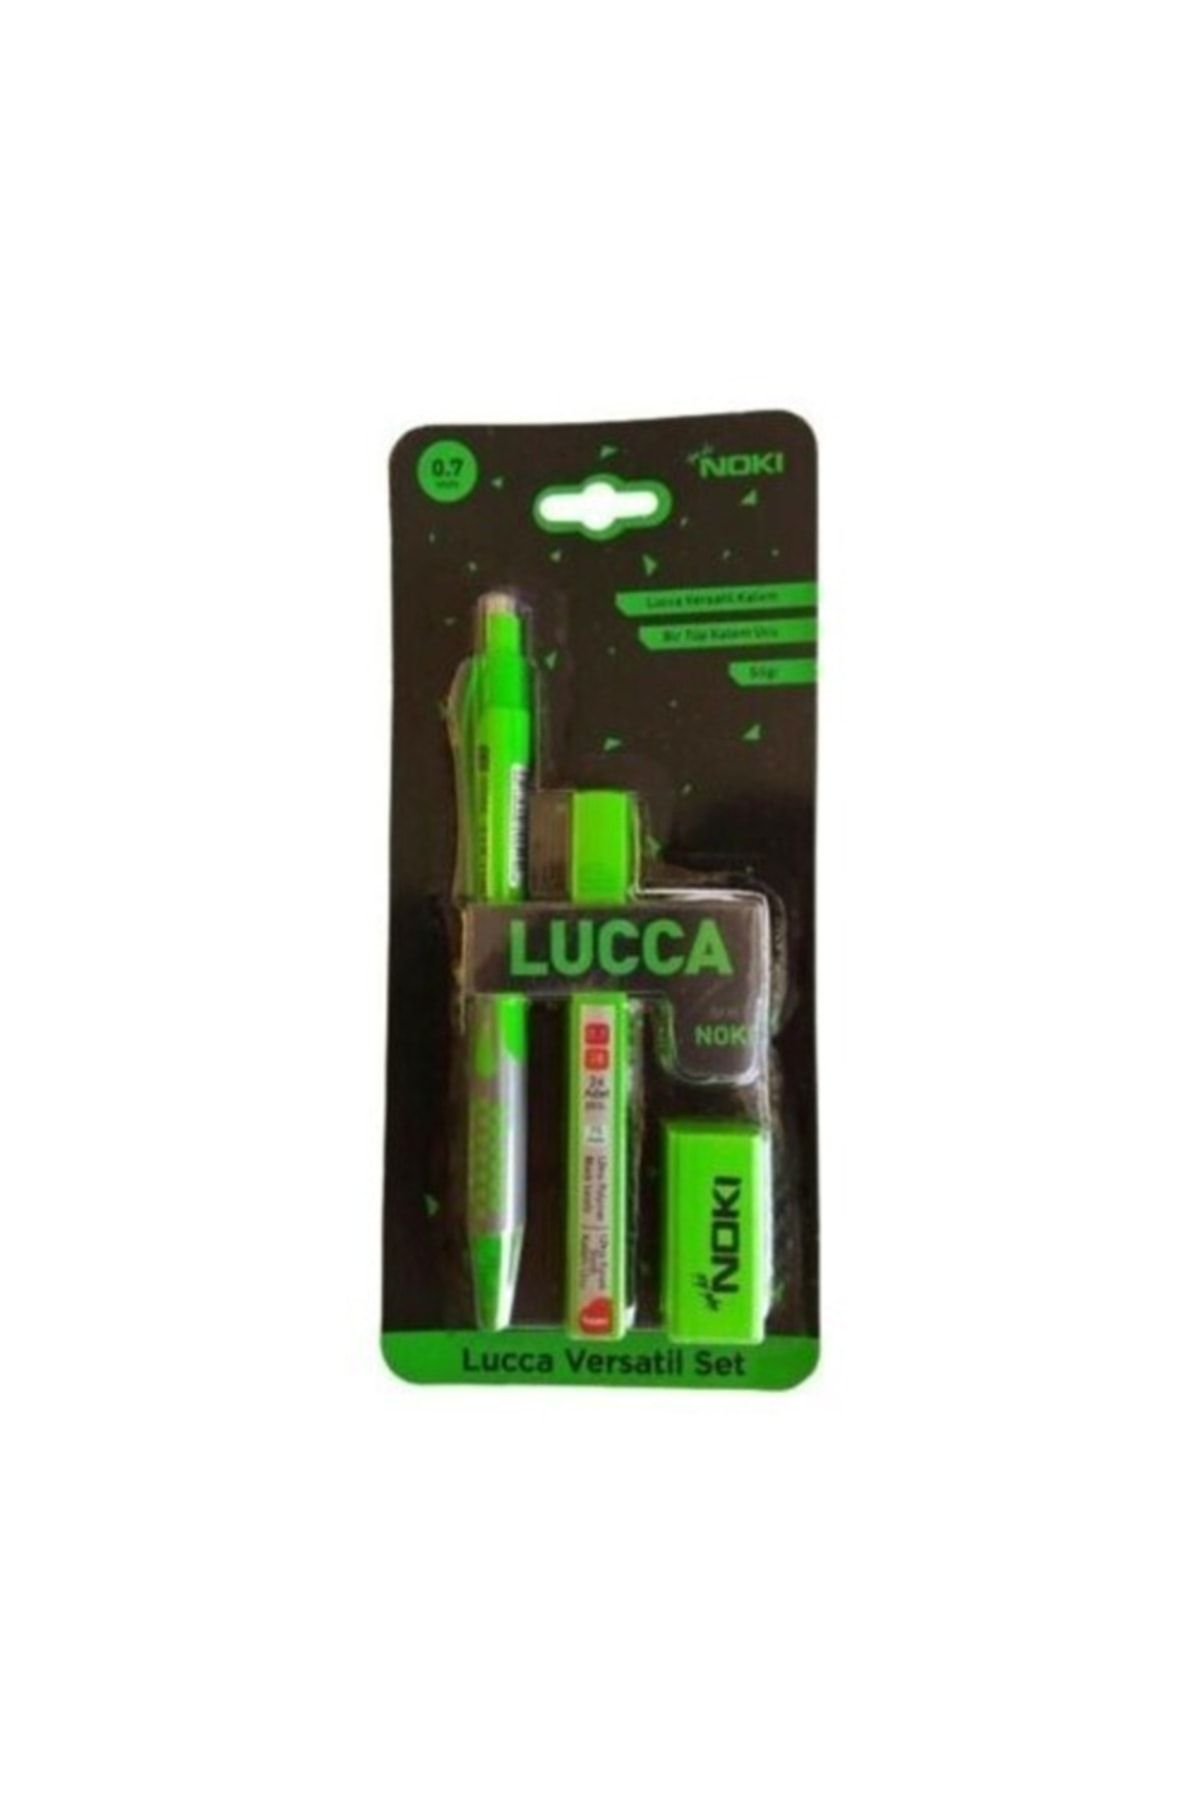 Noki Lucca Versatil Okul Seti 0.7 mm Yeşil - Kalem - Silgi - Uç